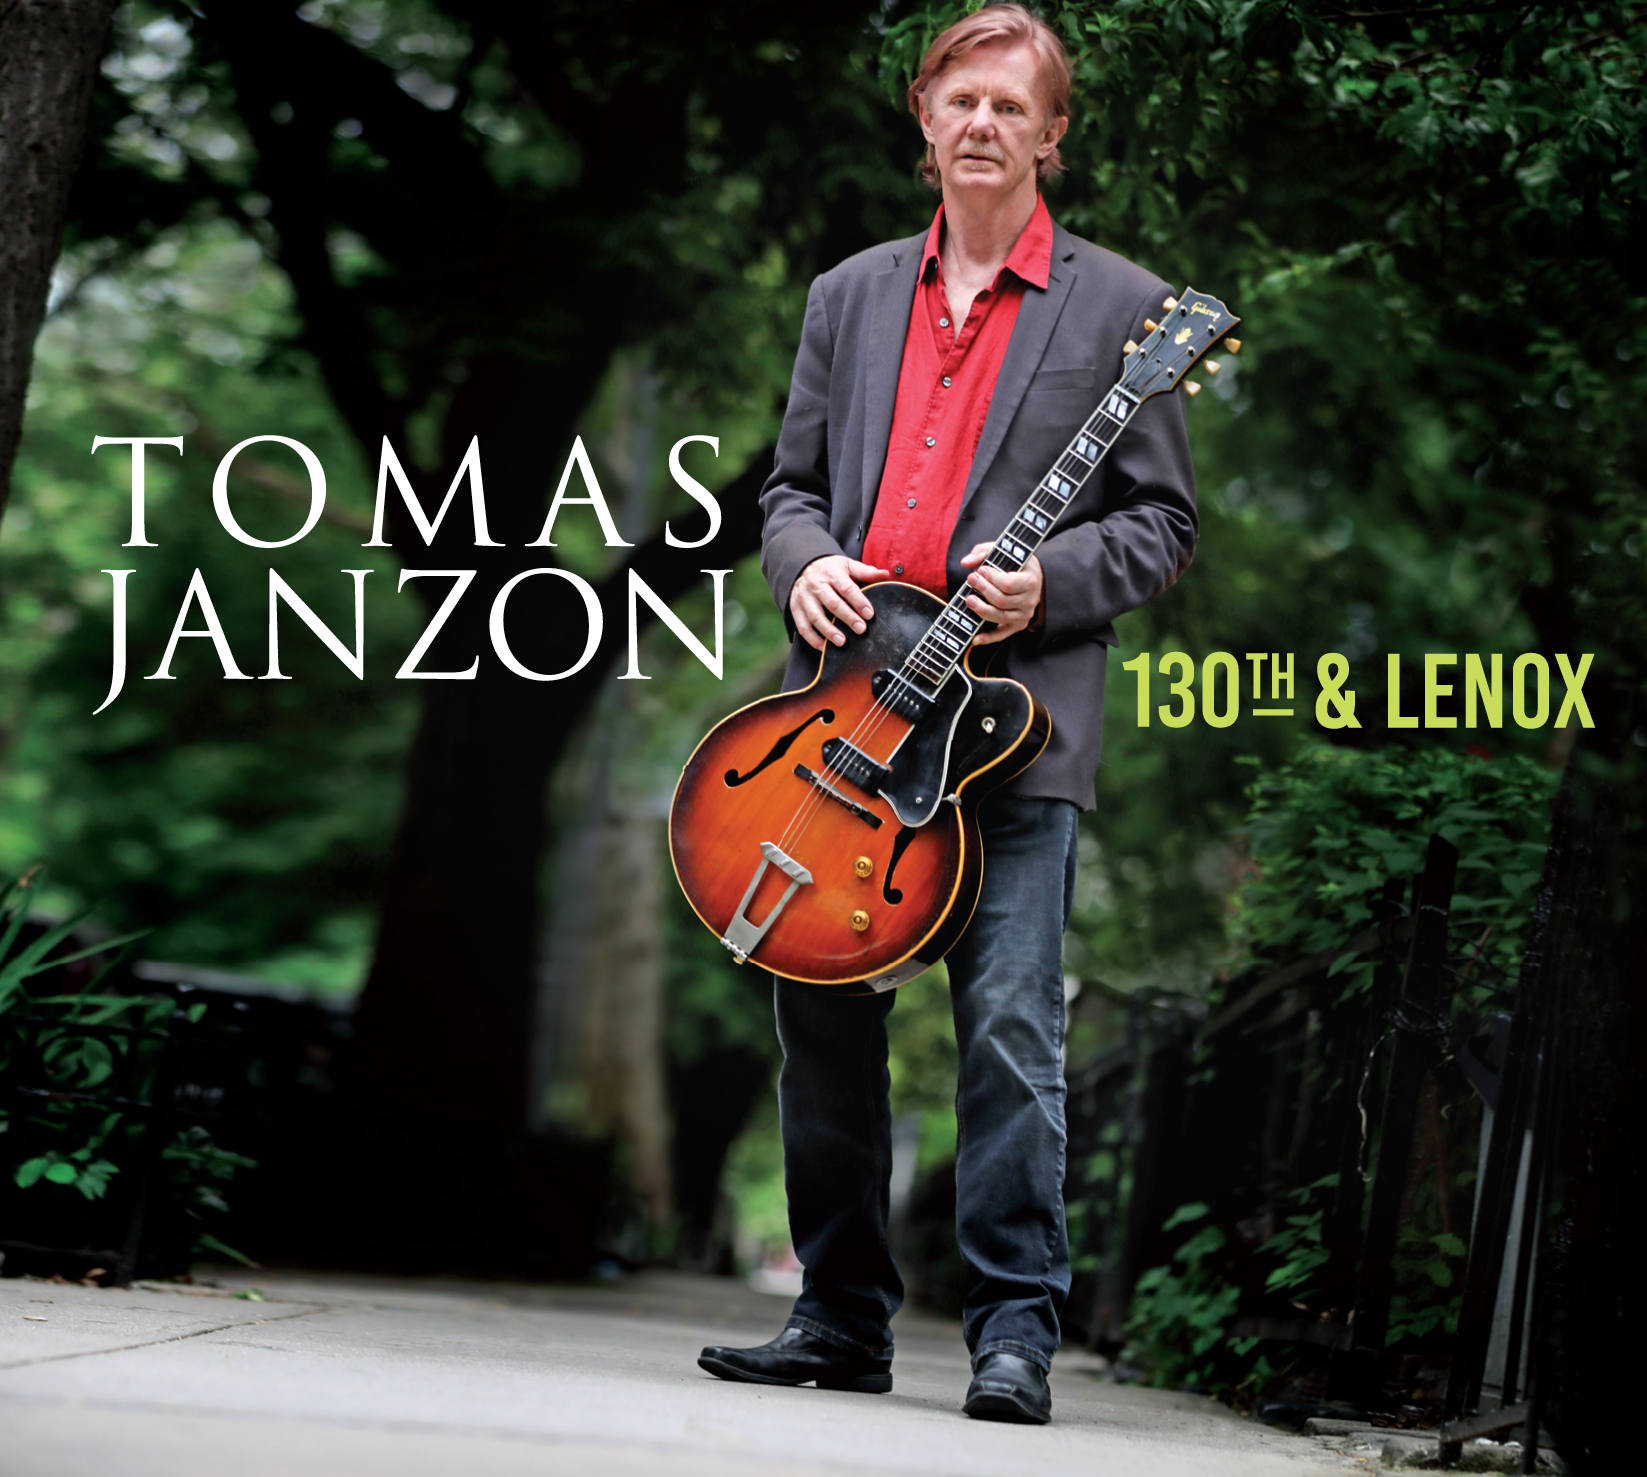 Full color album cover image from Jazz Guitarist Tomas Janzon